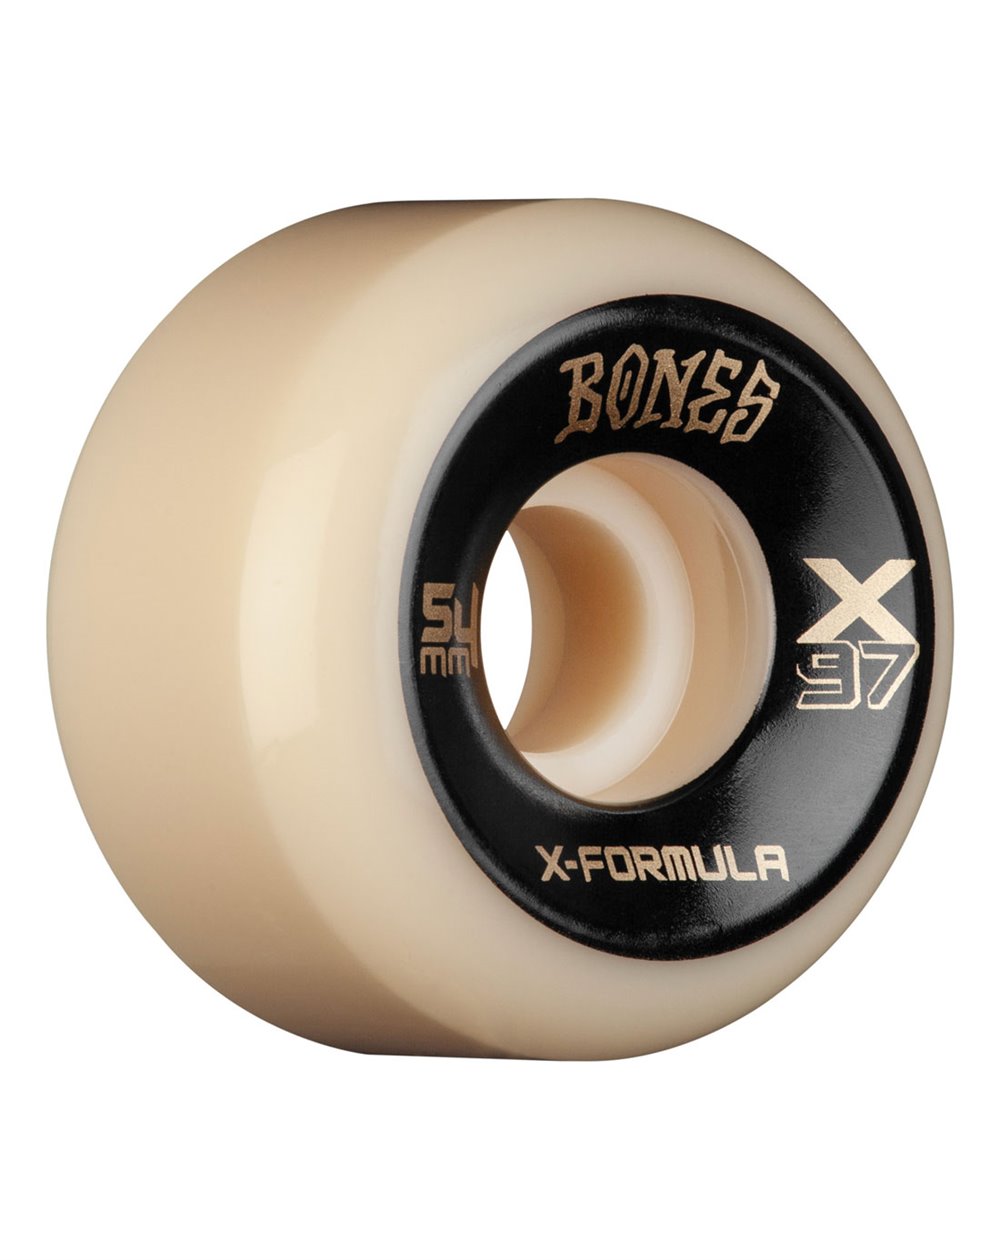 Bones Wheels X-Formula V6 Wide-Cut X-Ninety-Seven 54mm 97A Skateboard Wheels pack of 4